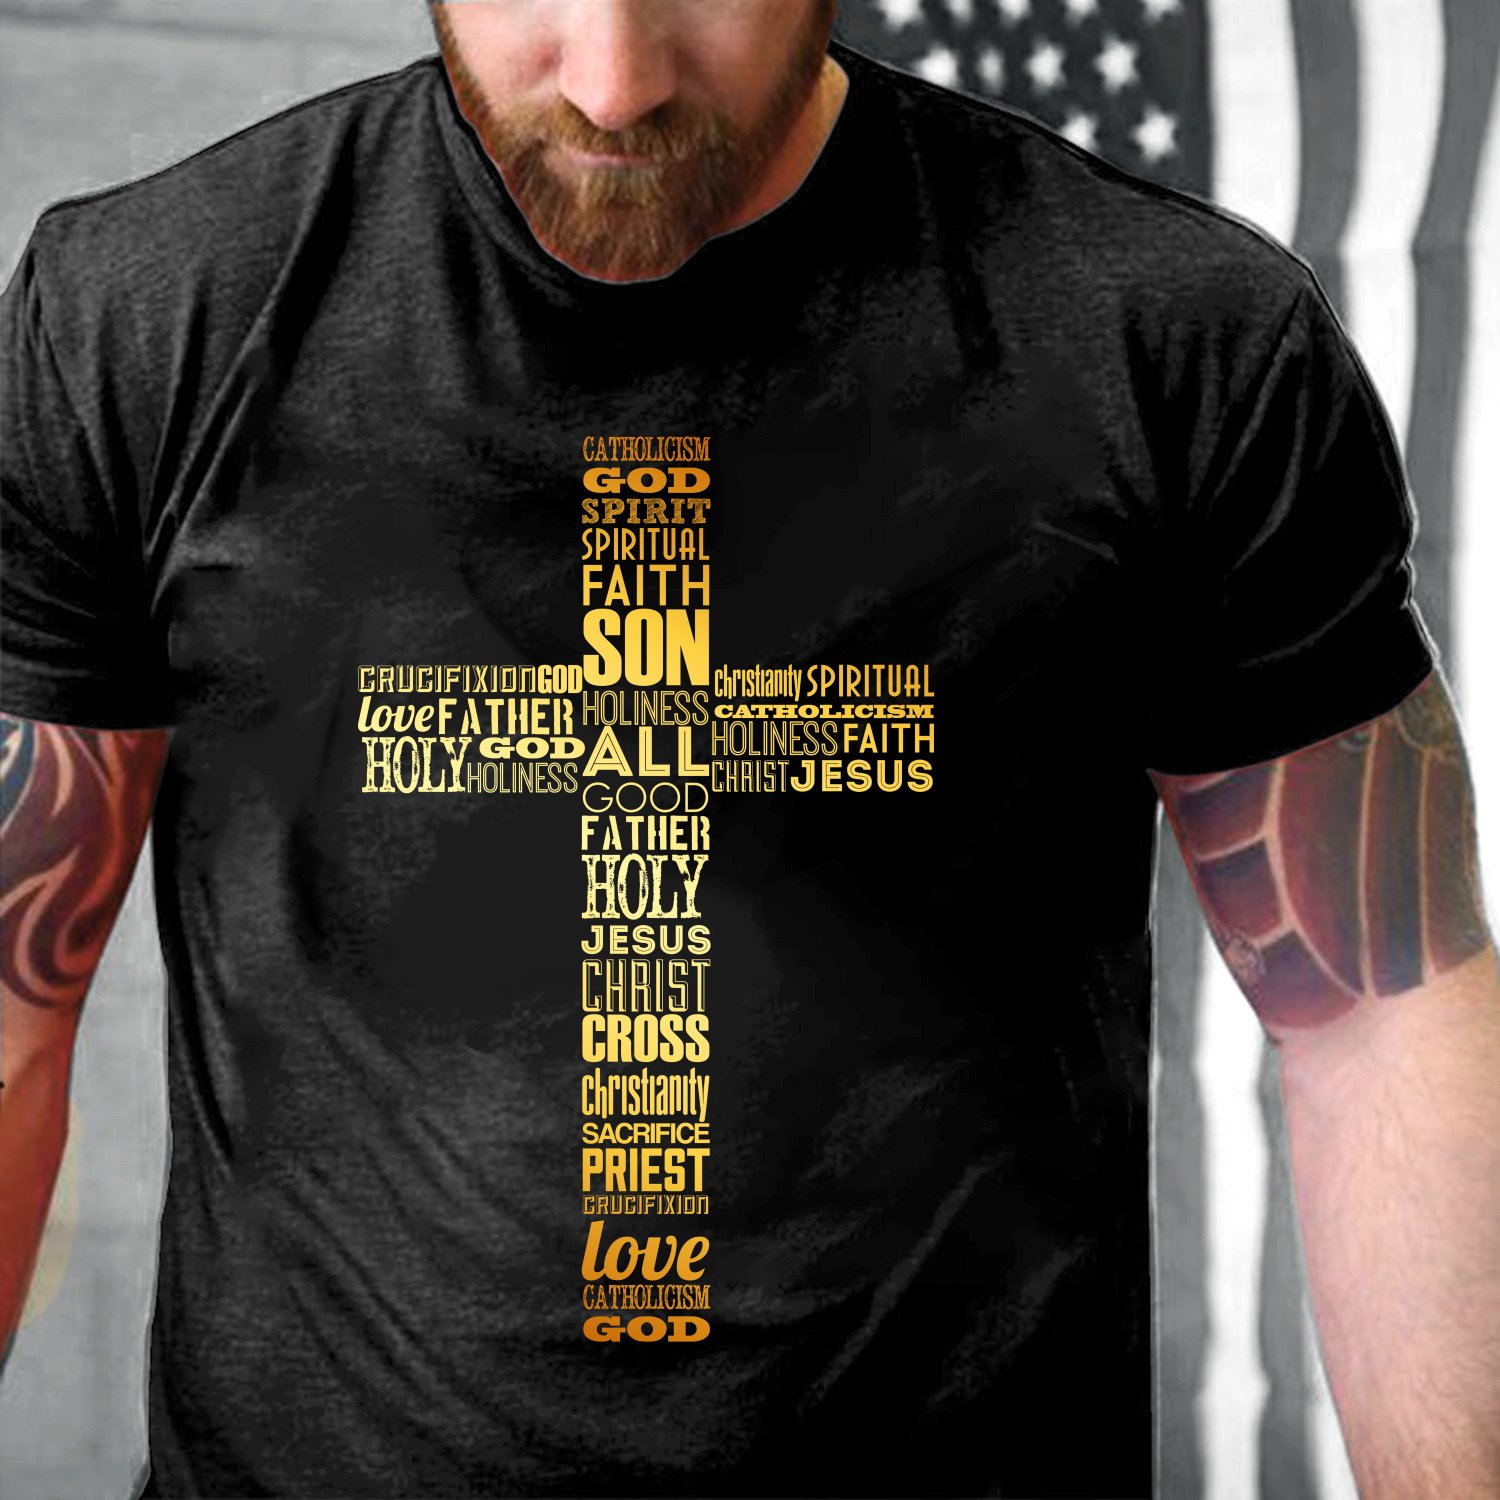 Christian Cross Shirt, Jesus Shirt, Gothic Celtic Cross Golden T-Shirt